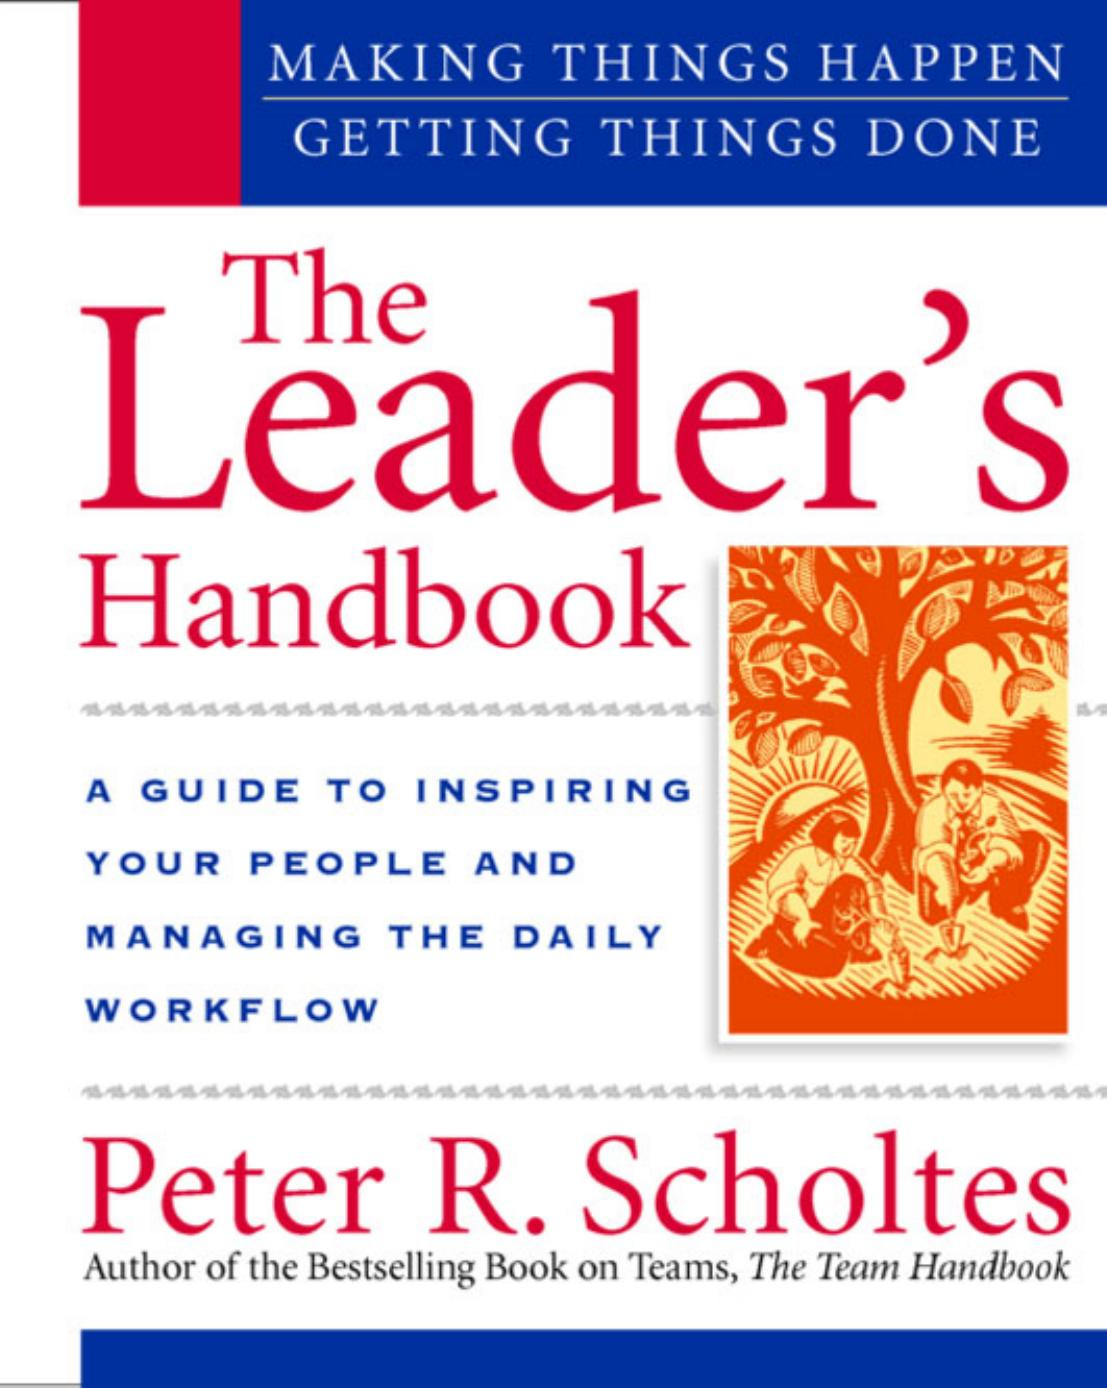 Wisdom from The Leader's Handbook - Part I